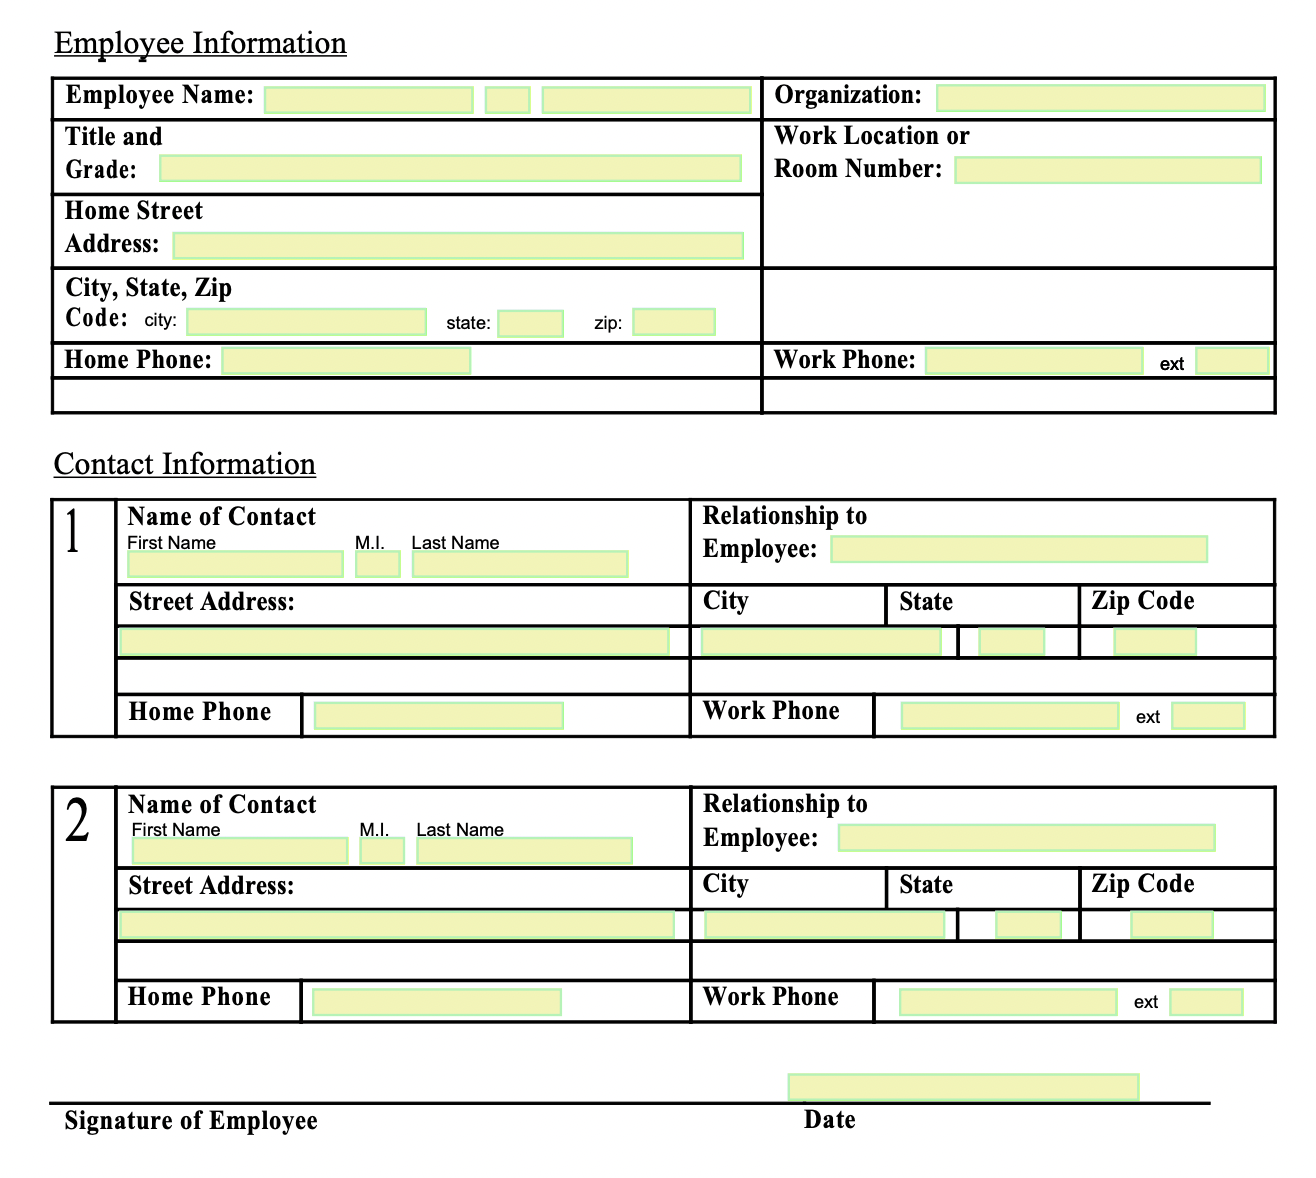 Employee information doc screenshot